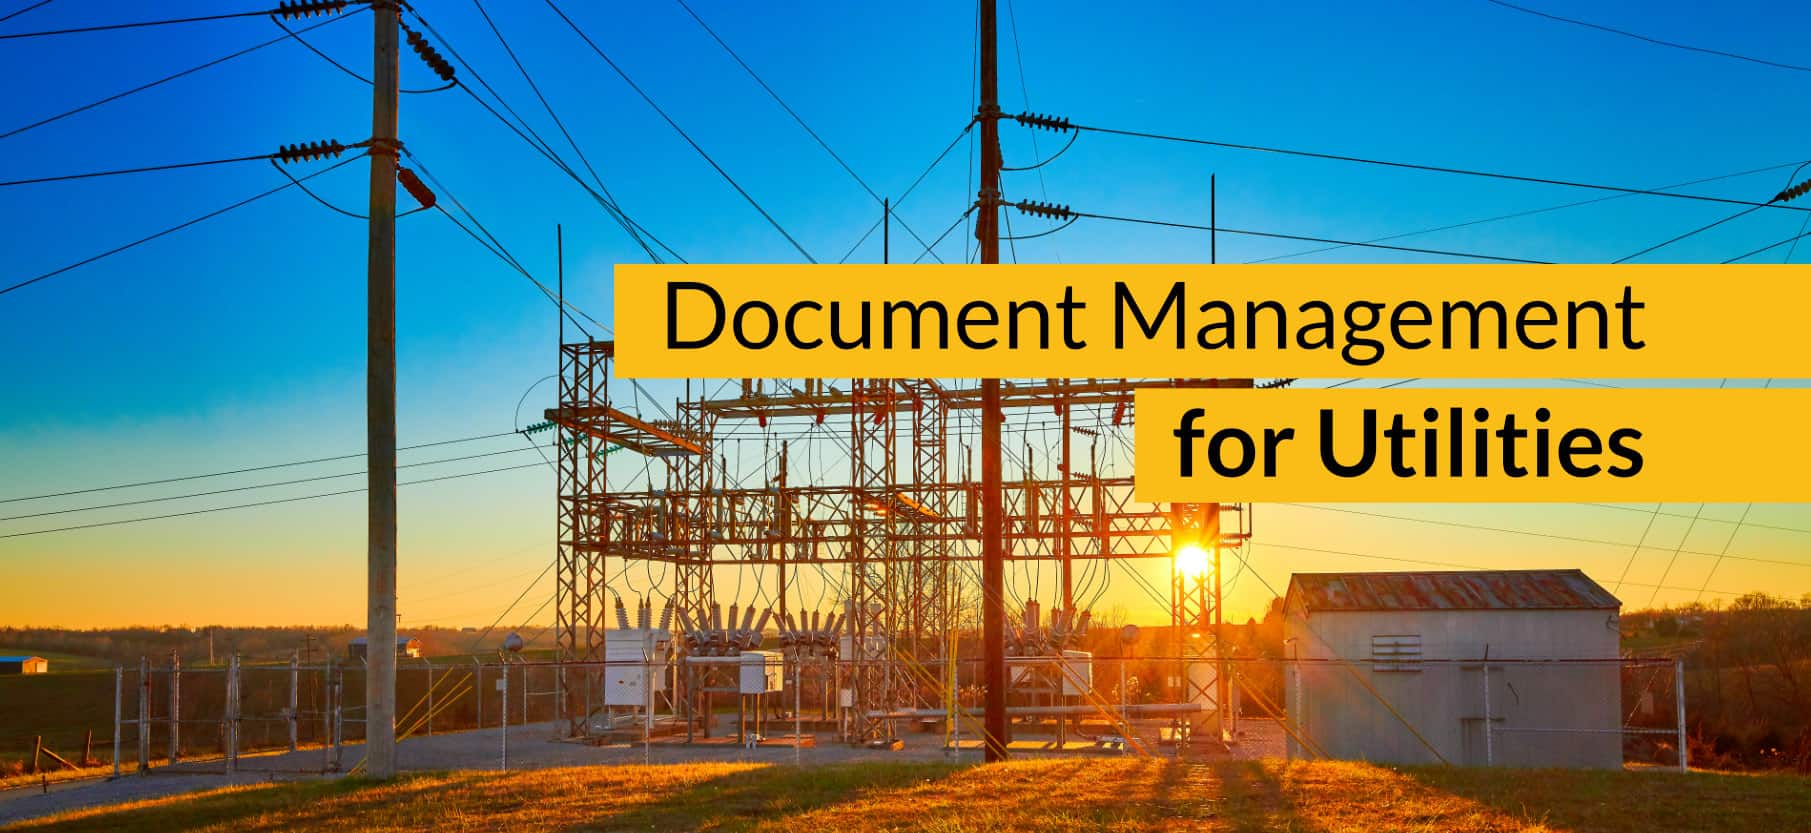 Document management for utilities